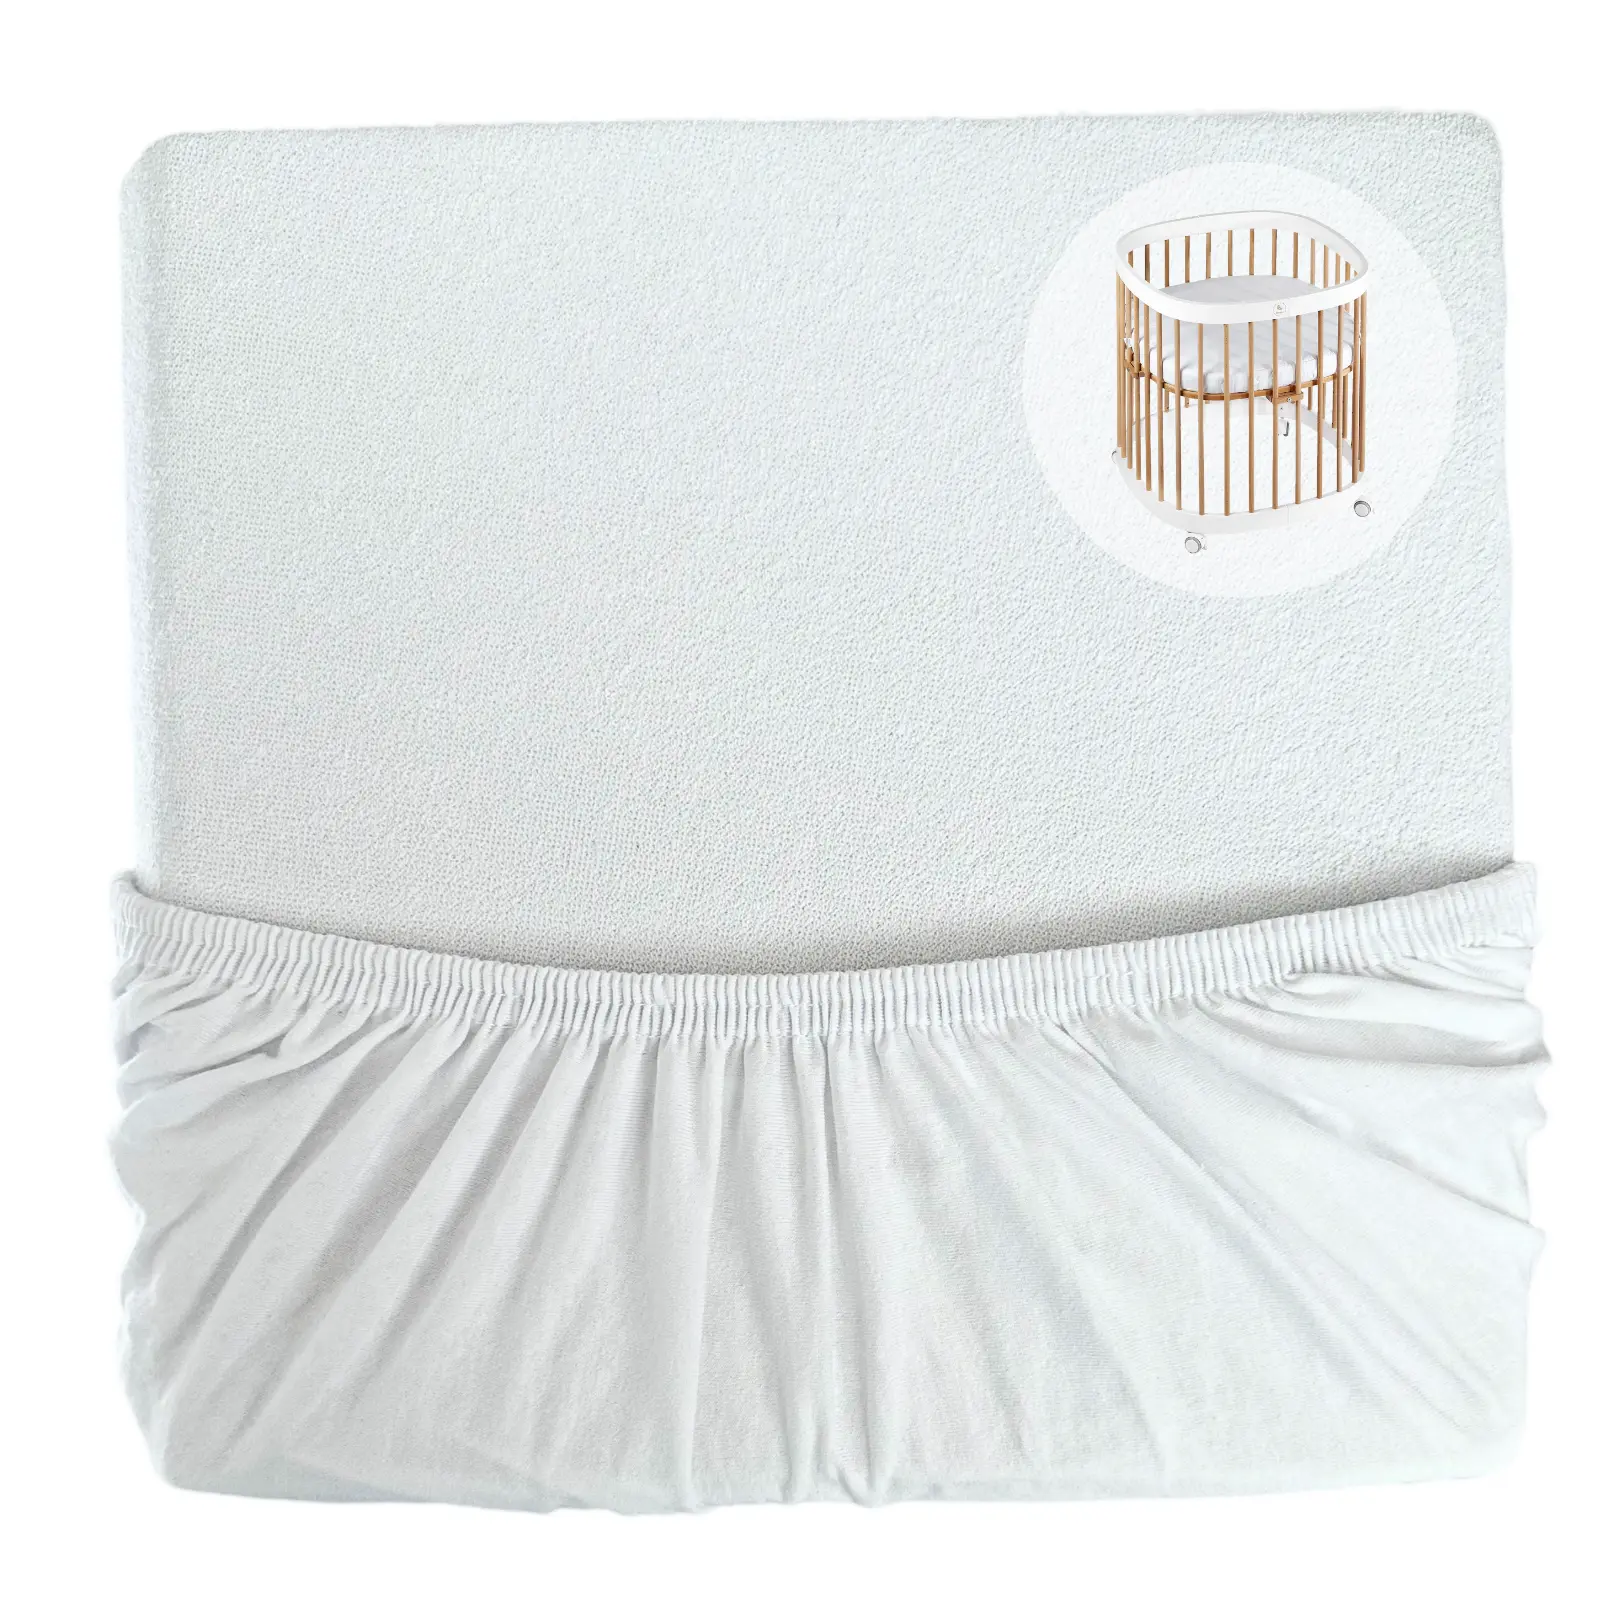 mattress protector - moisture protection - MINI - 70x70